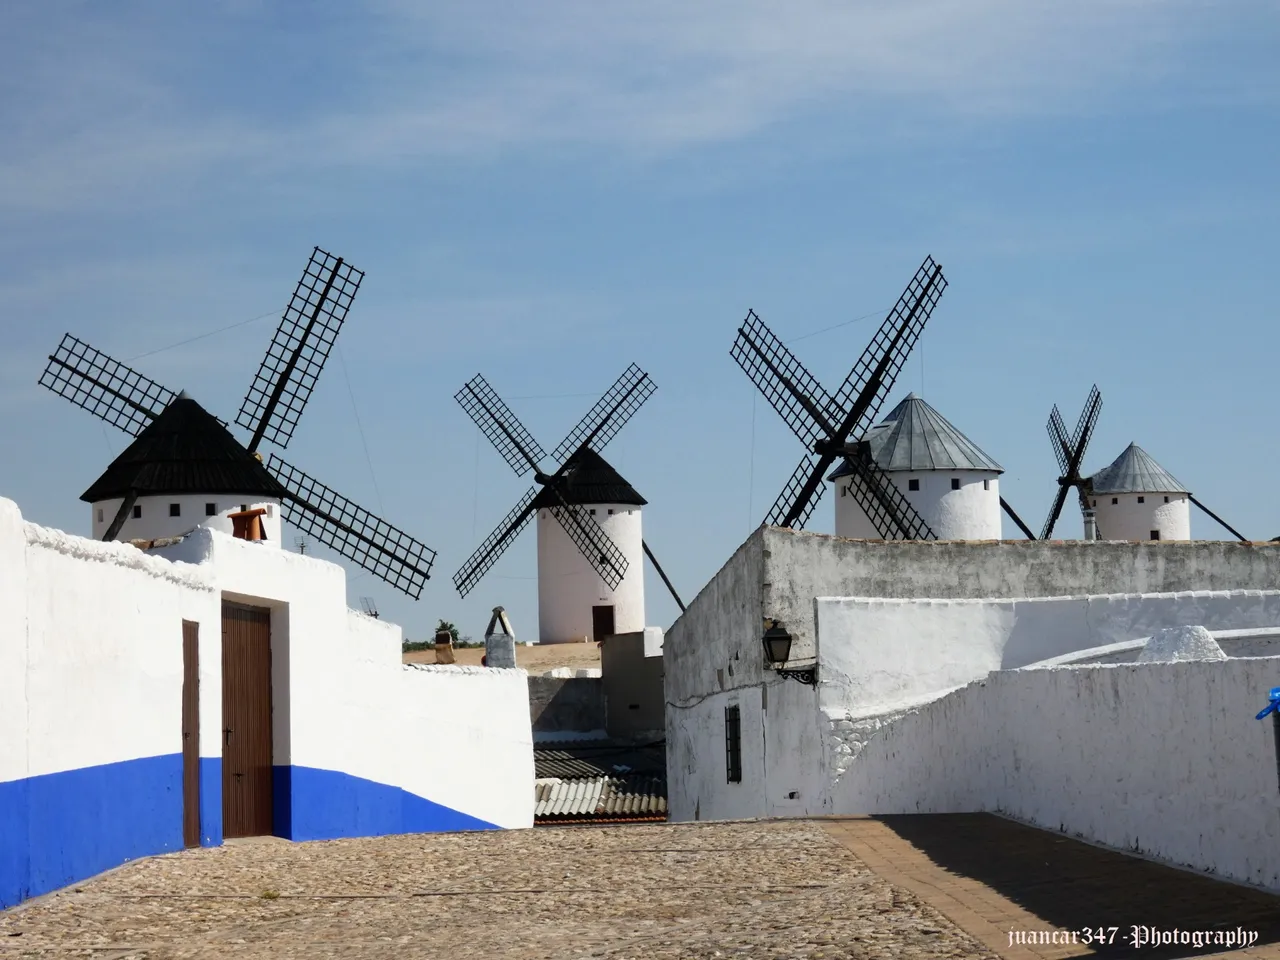 The windmills: historical heritage